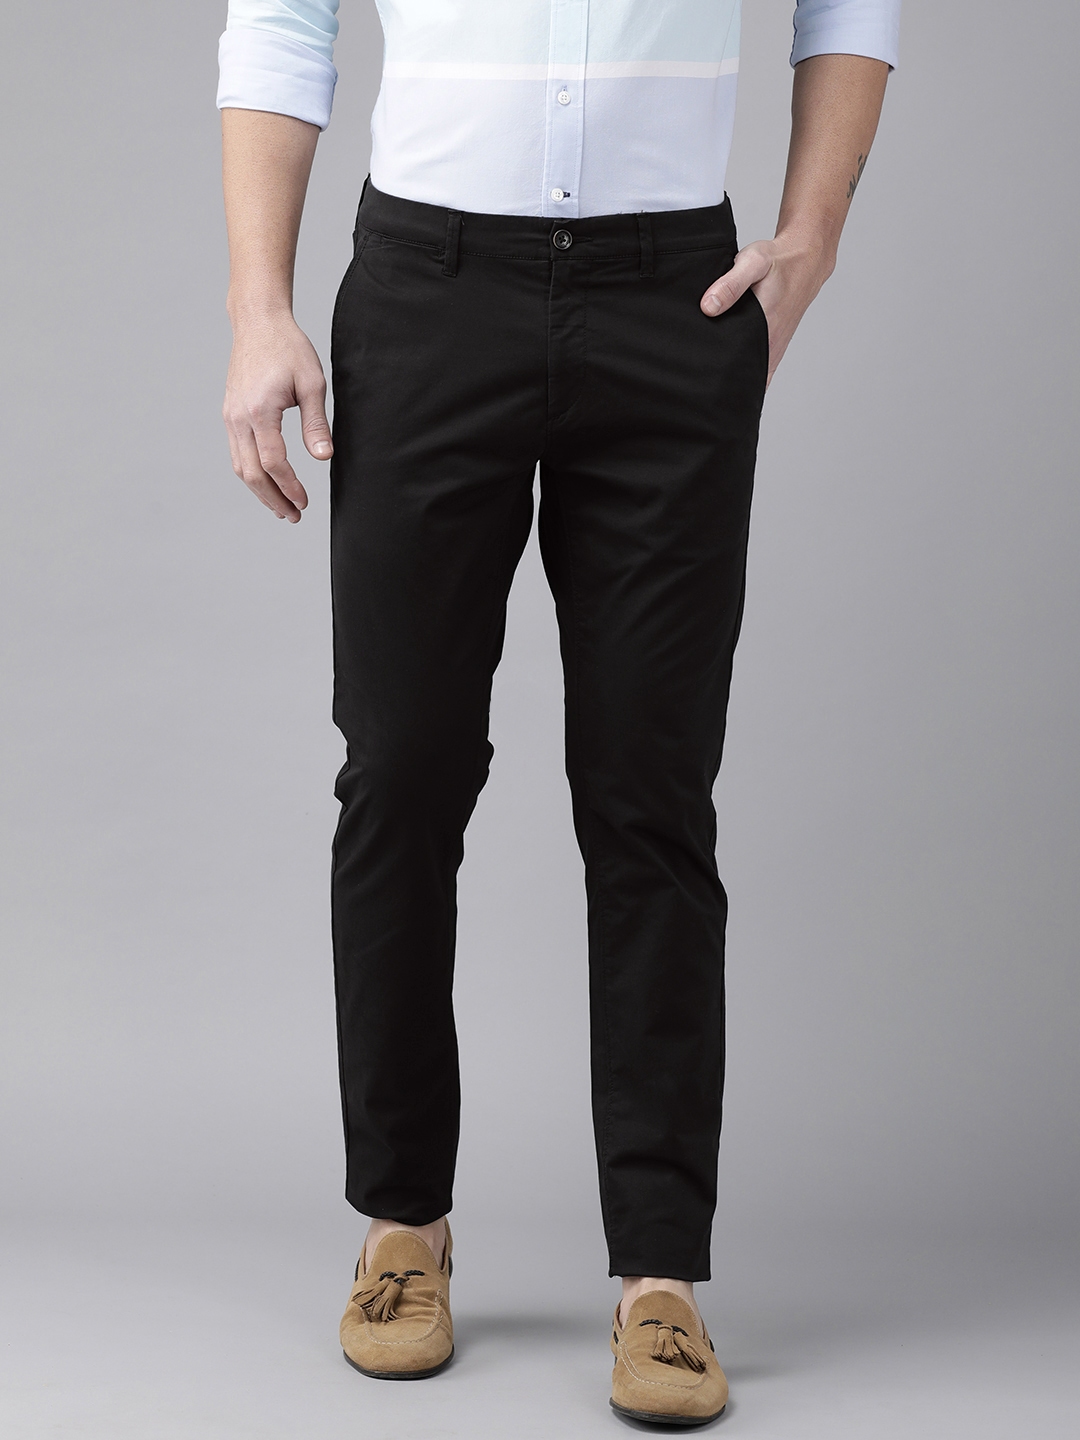 Buy Malayniel Mens Corduroy Skinny fit 5 Pocket Low Rise Casual Trouser  Beige 28W x 30L at Amazonin